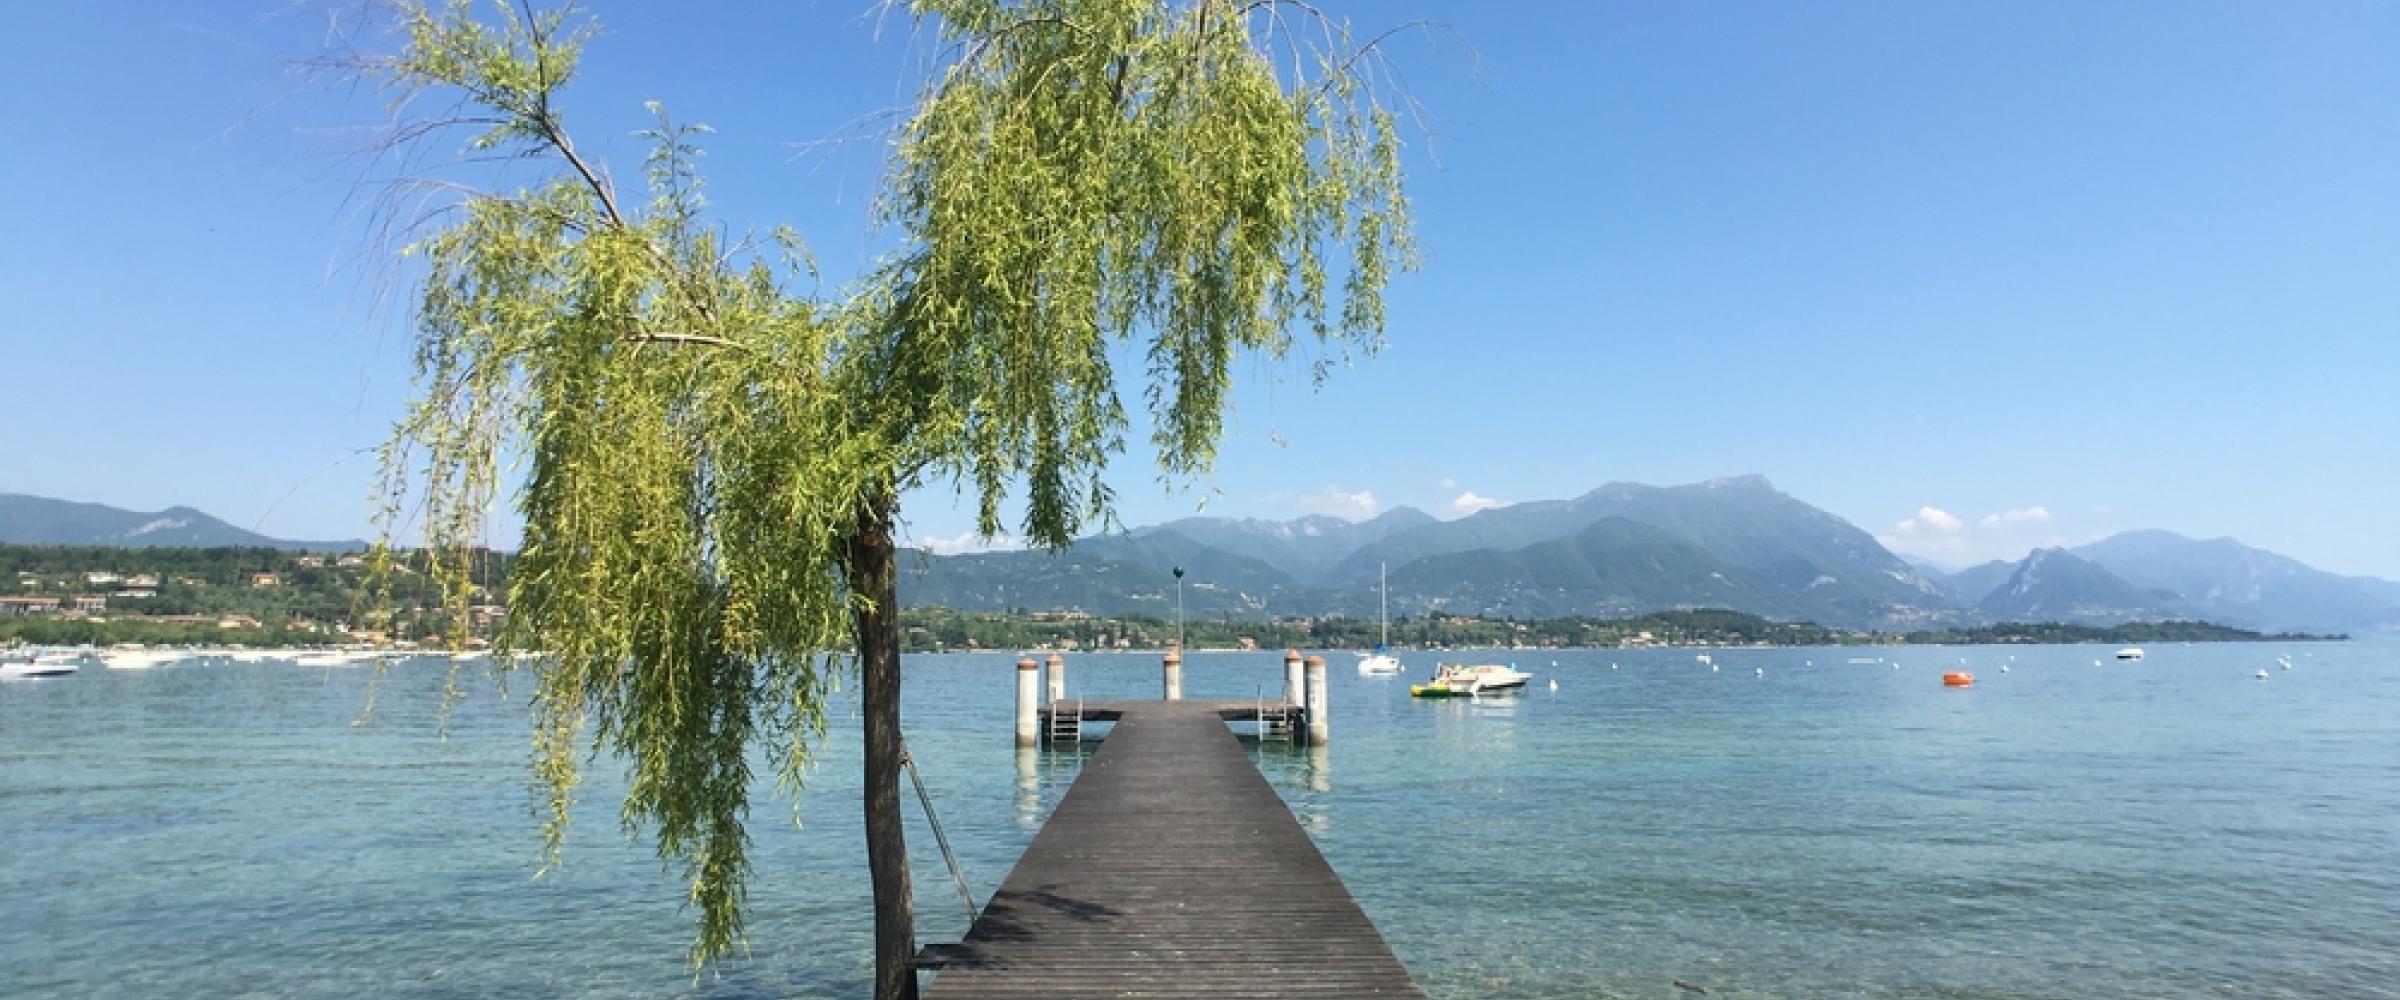 Why choose a residence on Lake Garda near the beach